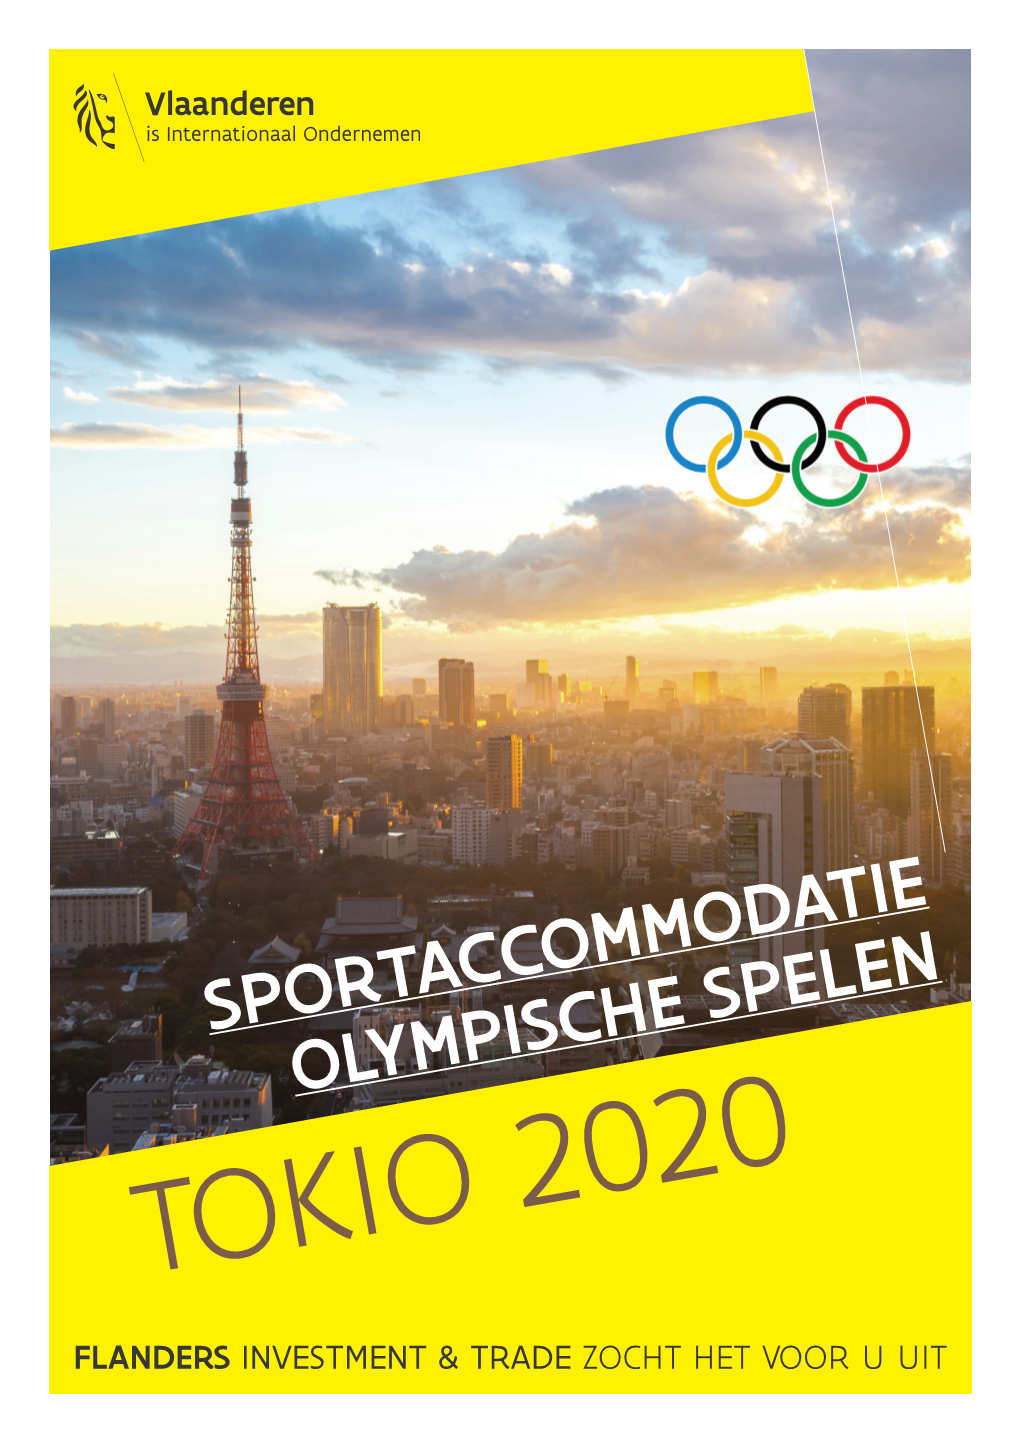 Sportaccommodatie Olympische Spelen Tokio 2020